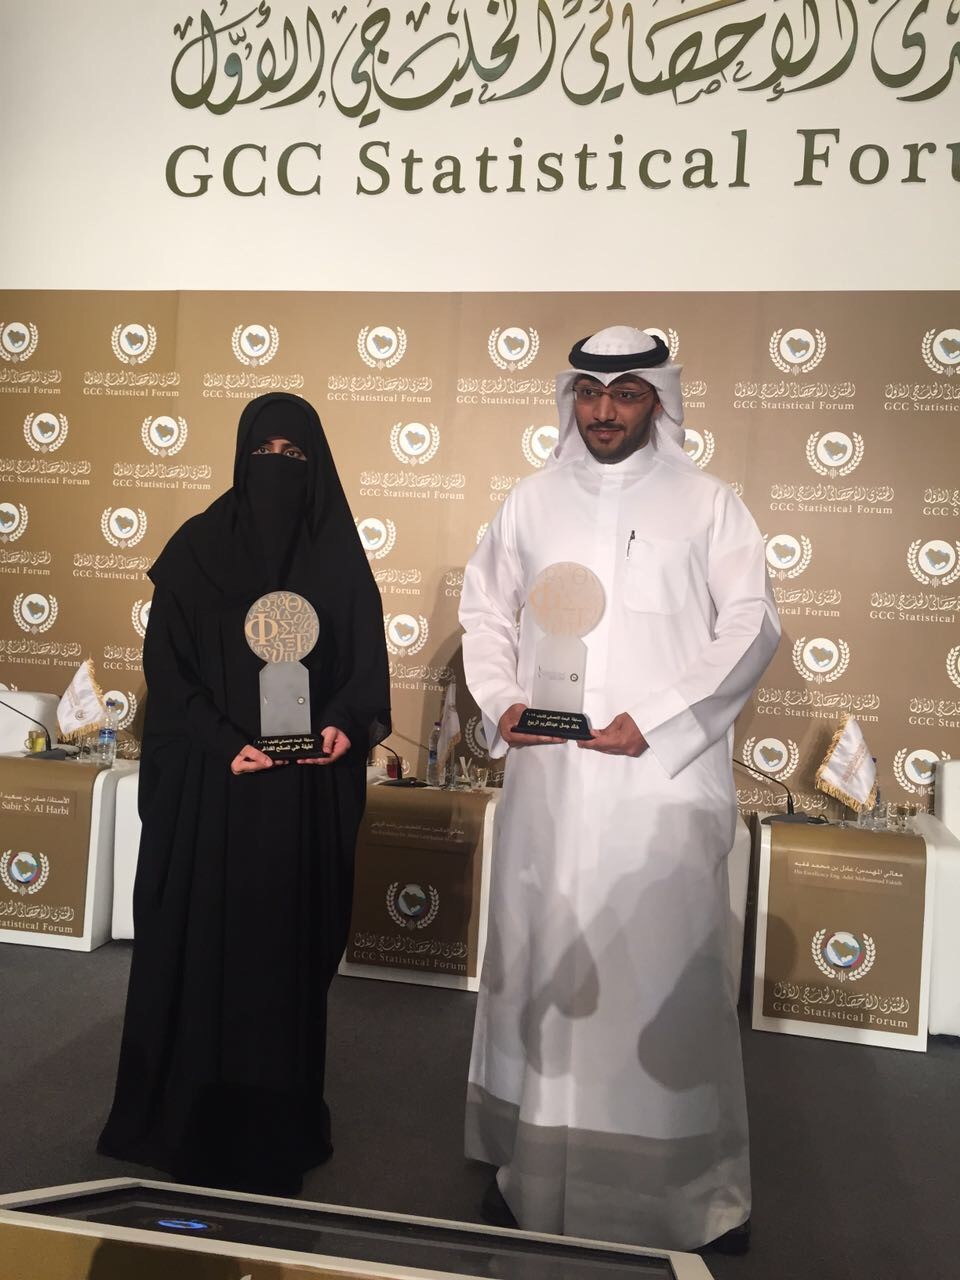 Kuwaiti researchers Khaled Al-Rabie and Latifah Al-Fadaghi wins youth statistics research awards at the 1st GCC statistics forum